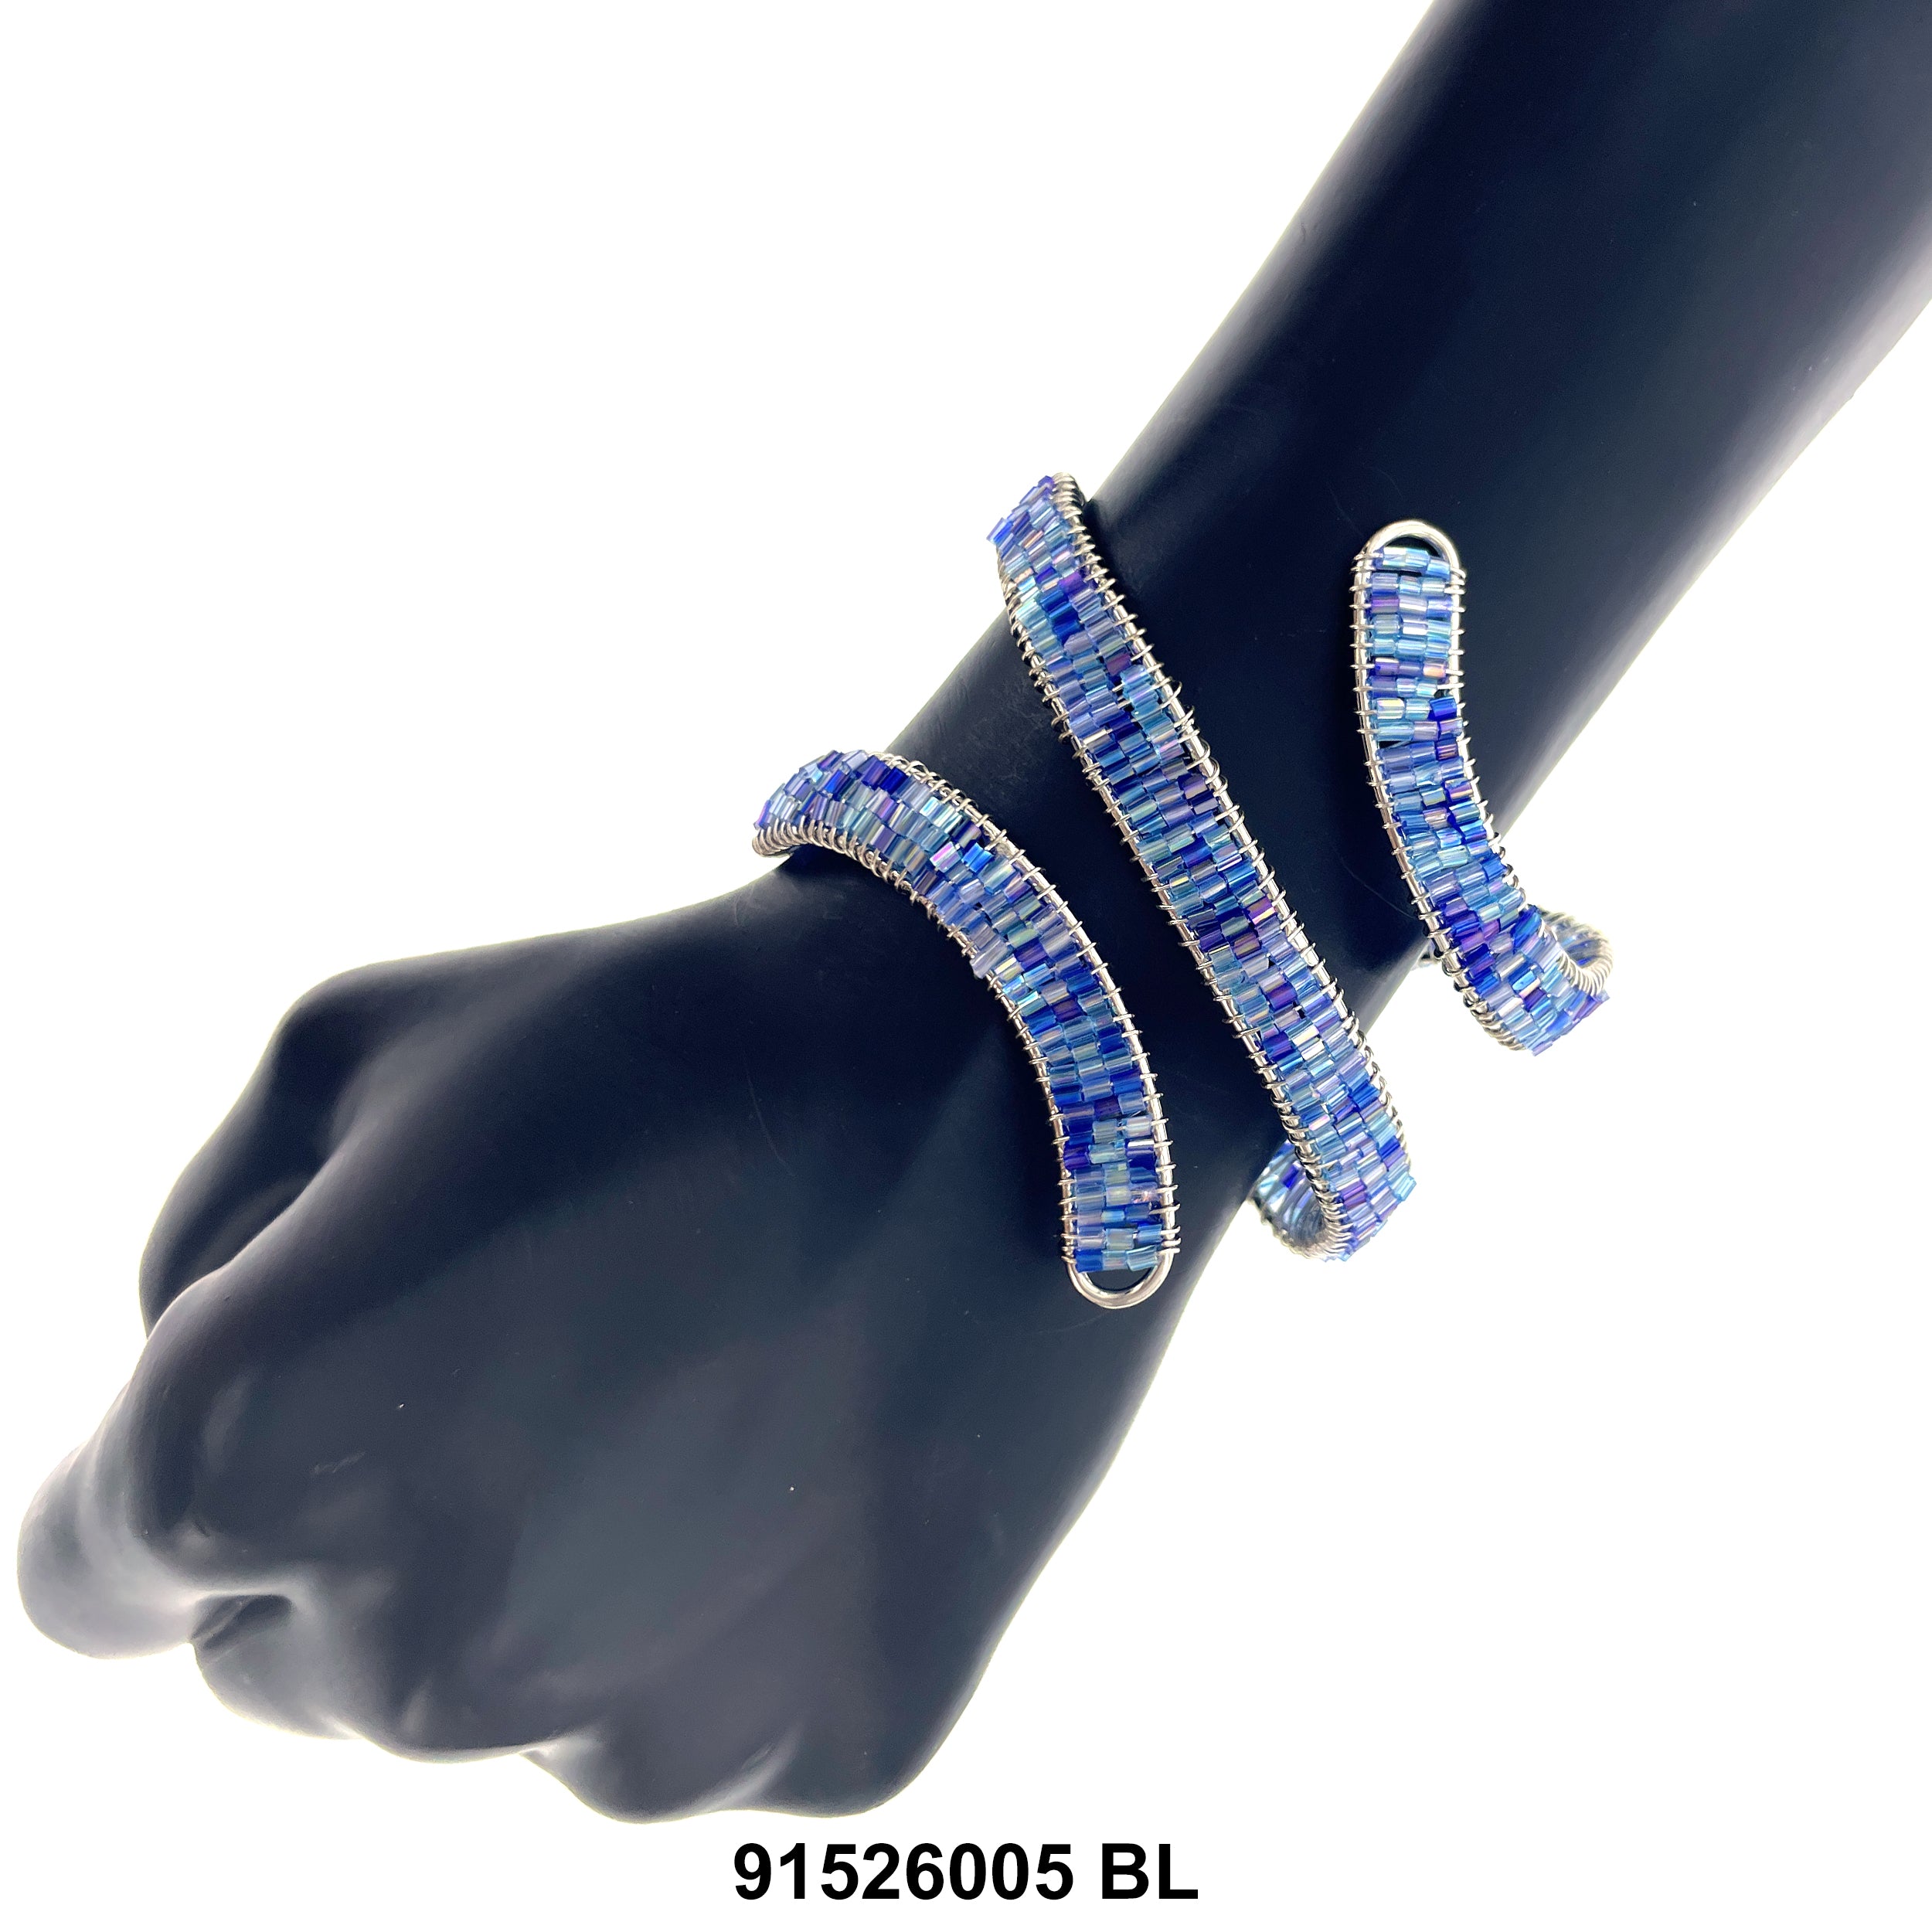 Cuff Bangle Bracelet 91526005 BL